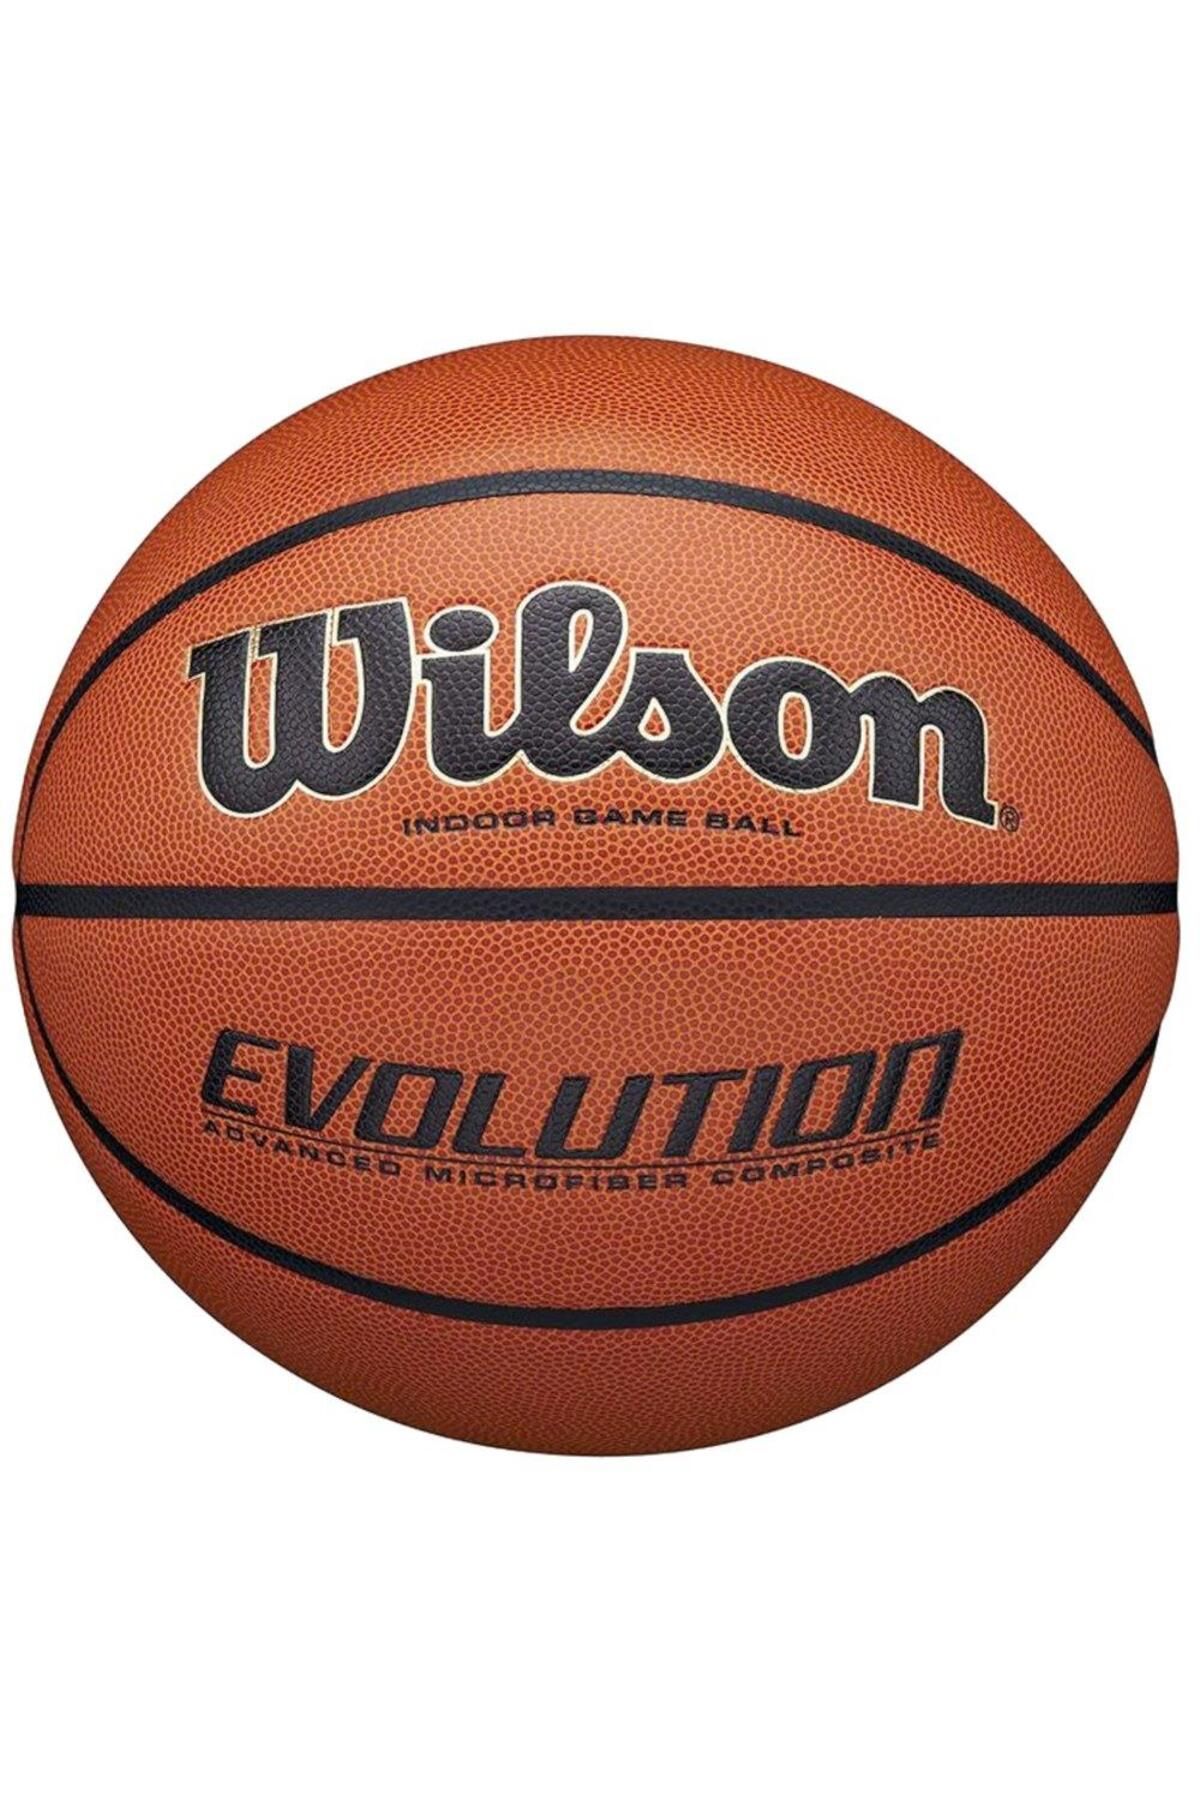 Wilson Basketbol Topu EVOLUTION Size:7 EMEA WTB0516XBEMEA